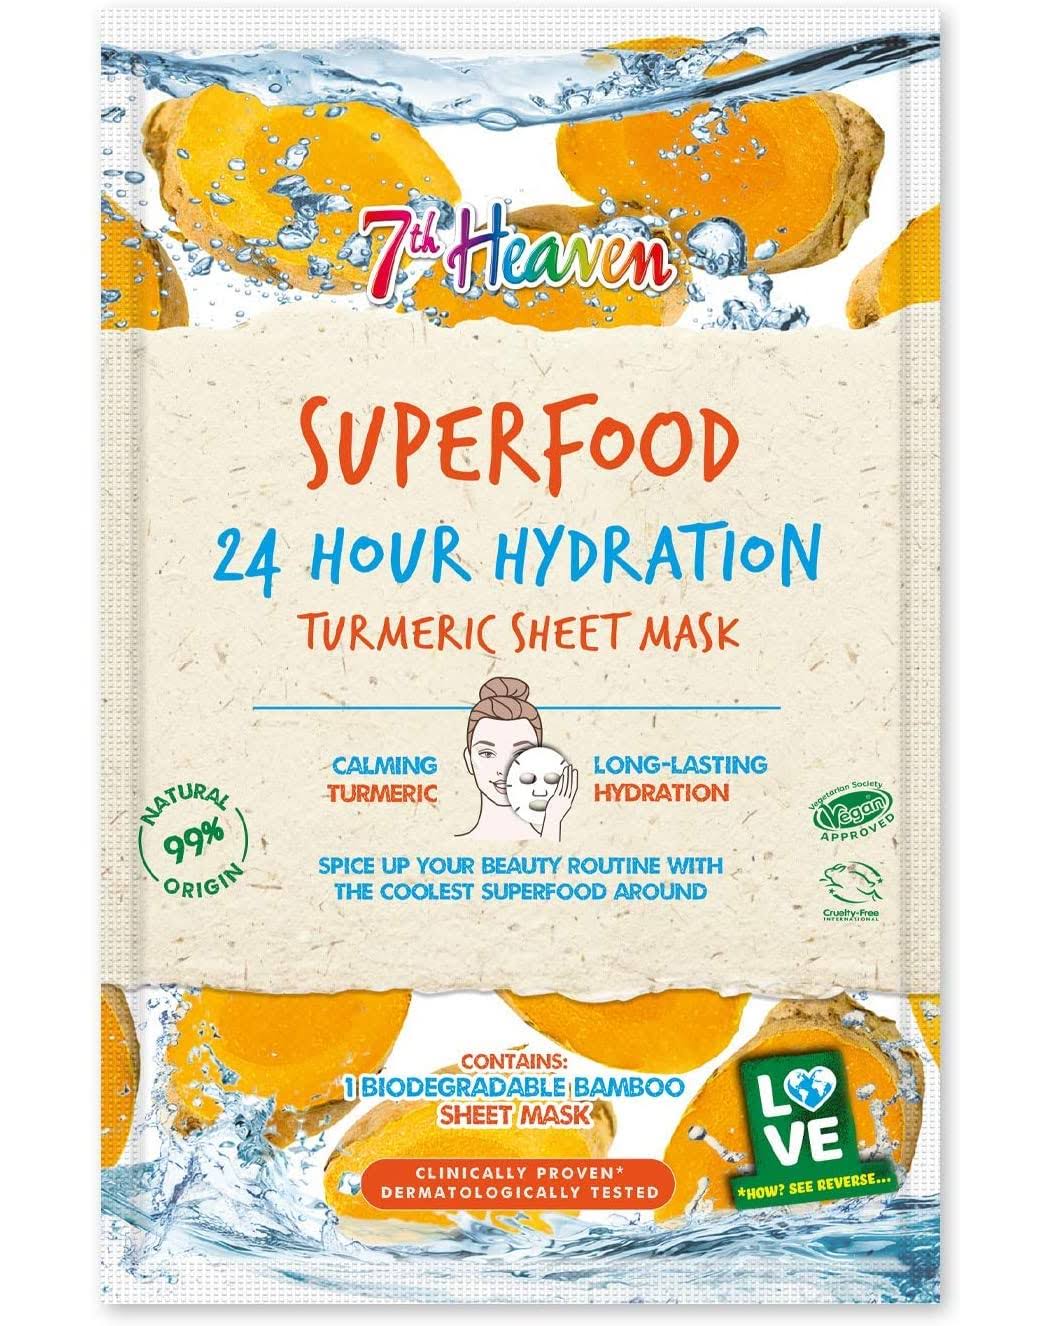 7th Heaven Superfood 24hr Hydration Turmeric Sheet Mask